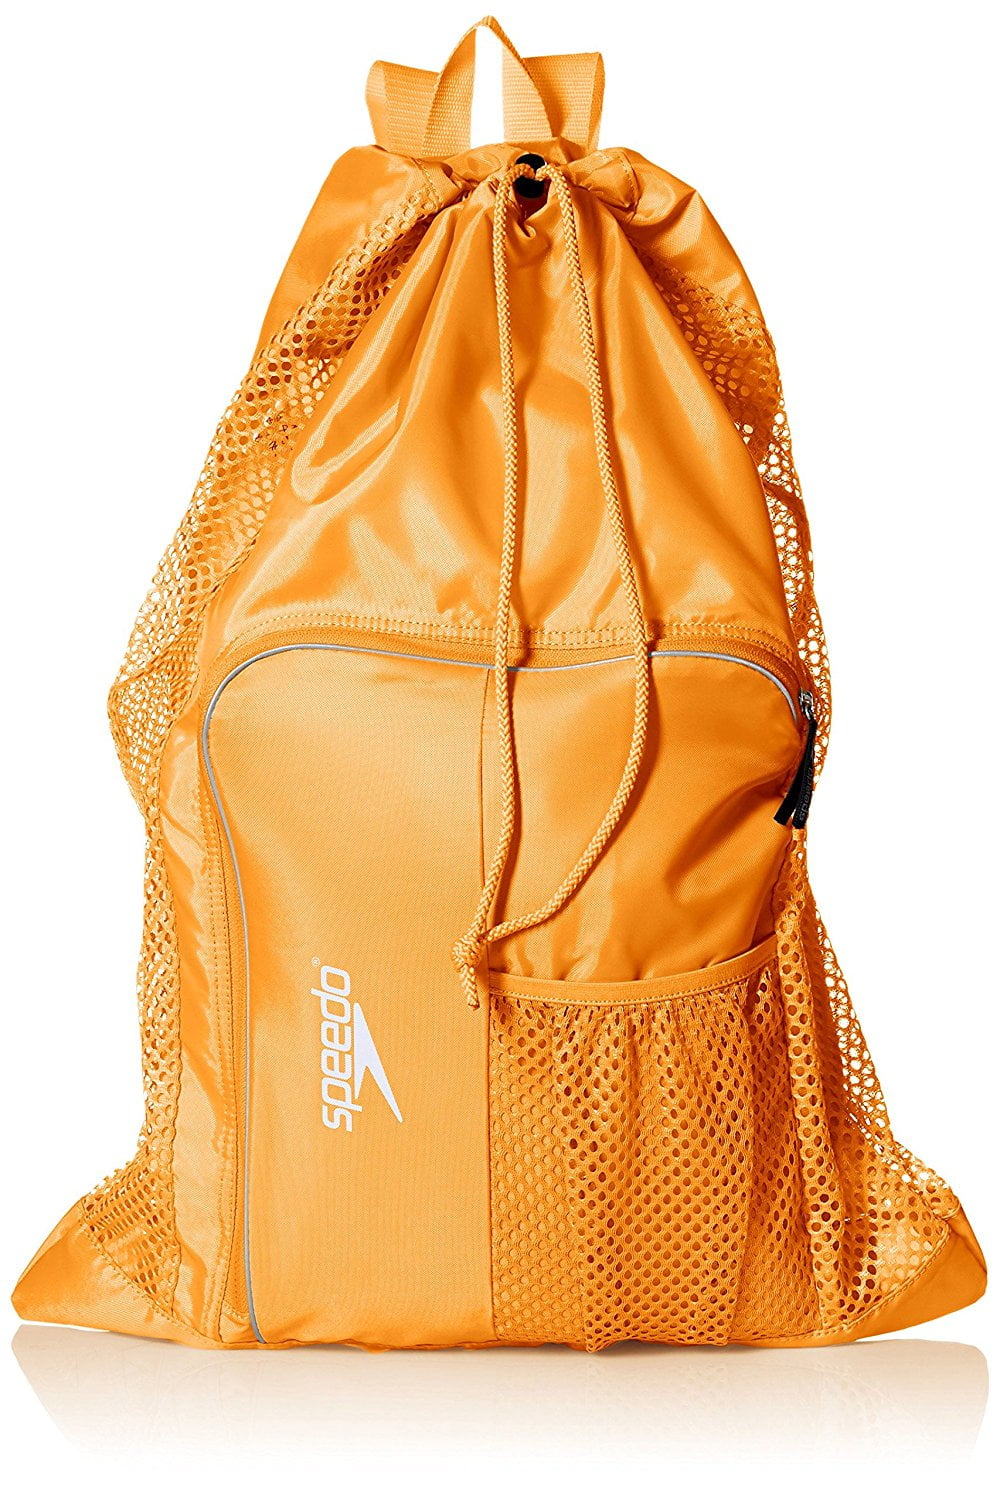 Speedo Equipment Mesh Bag  Orange 